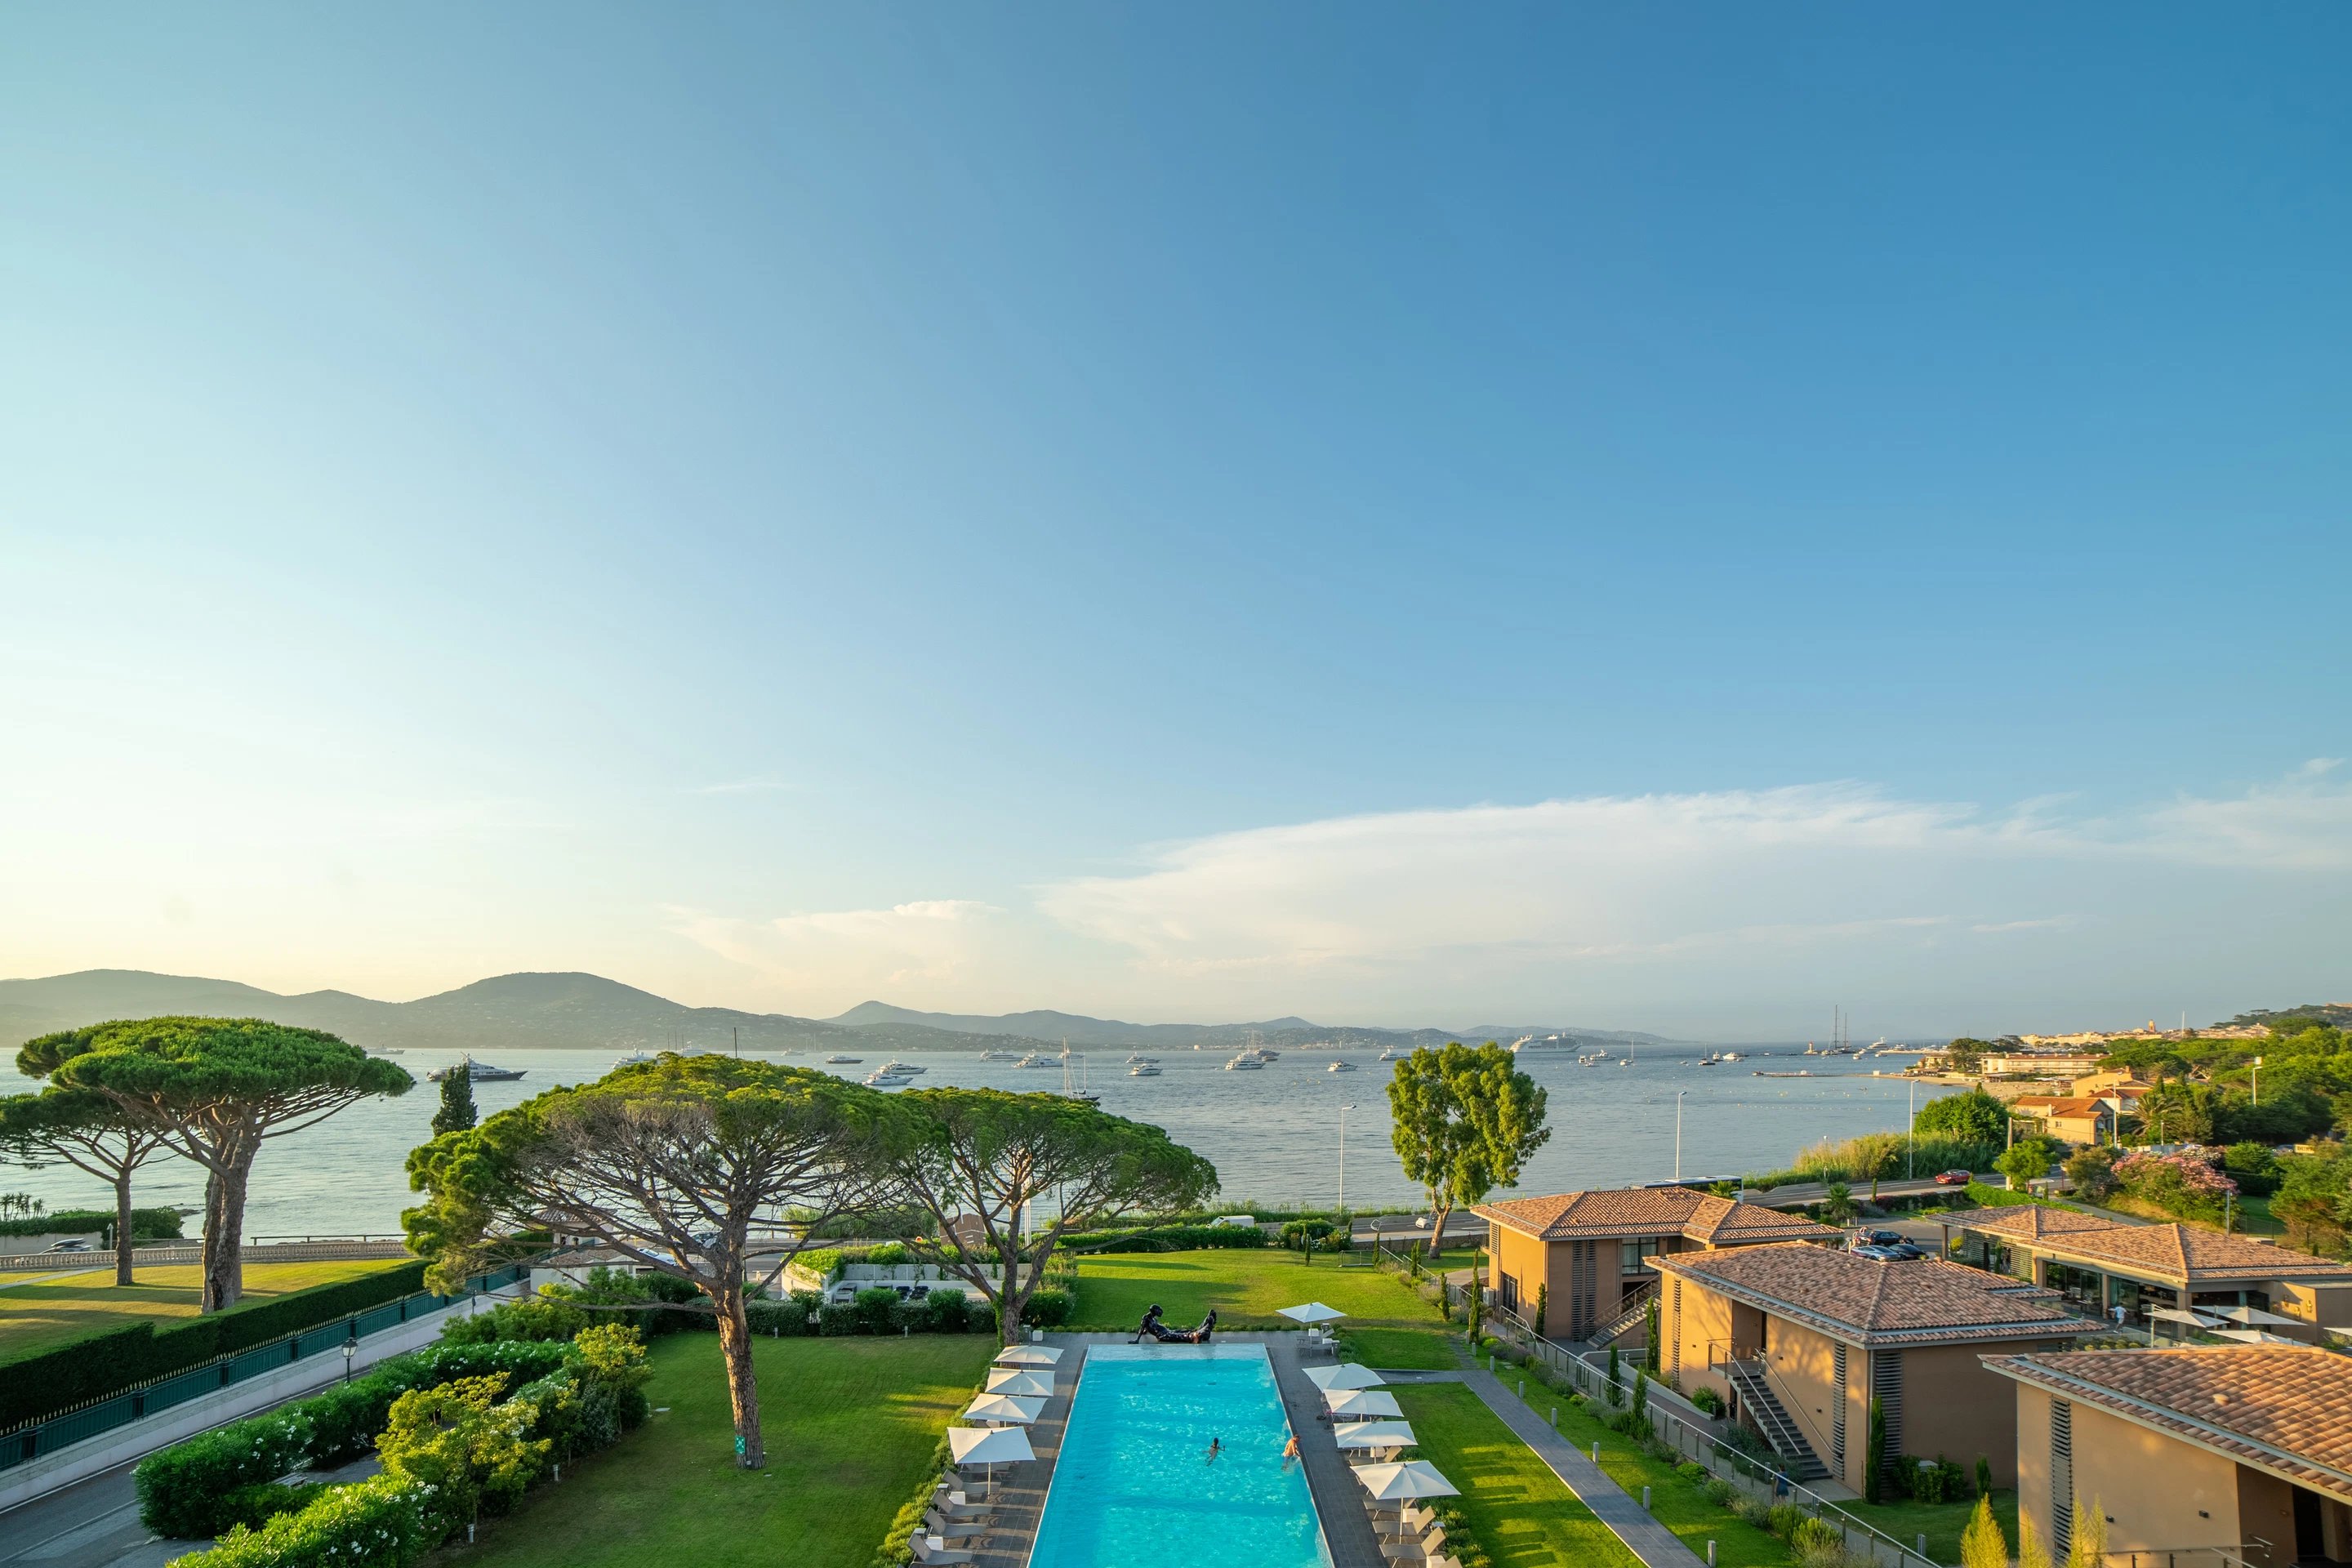 Outdoor pool - sea view - Kube Hotel Saint-Tropez - French Riviera